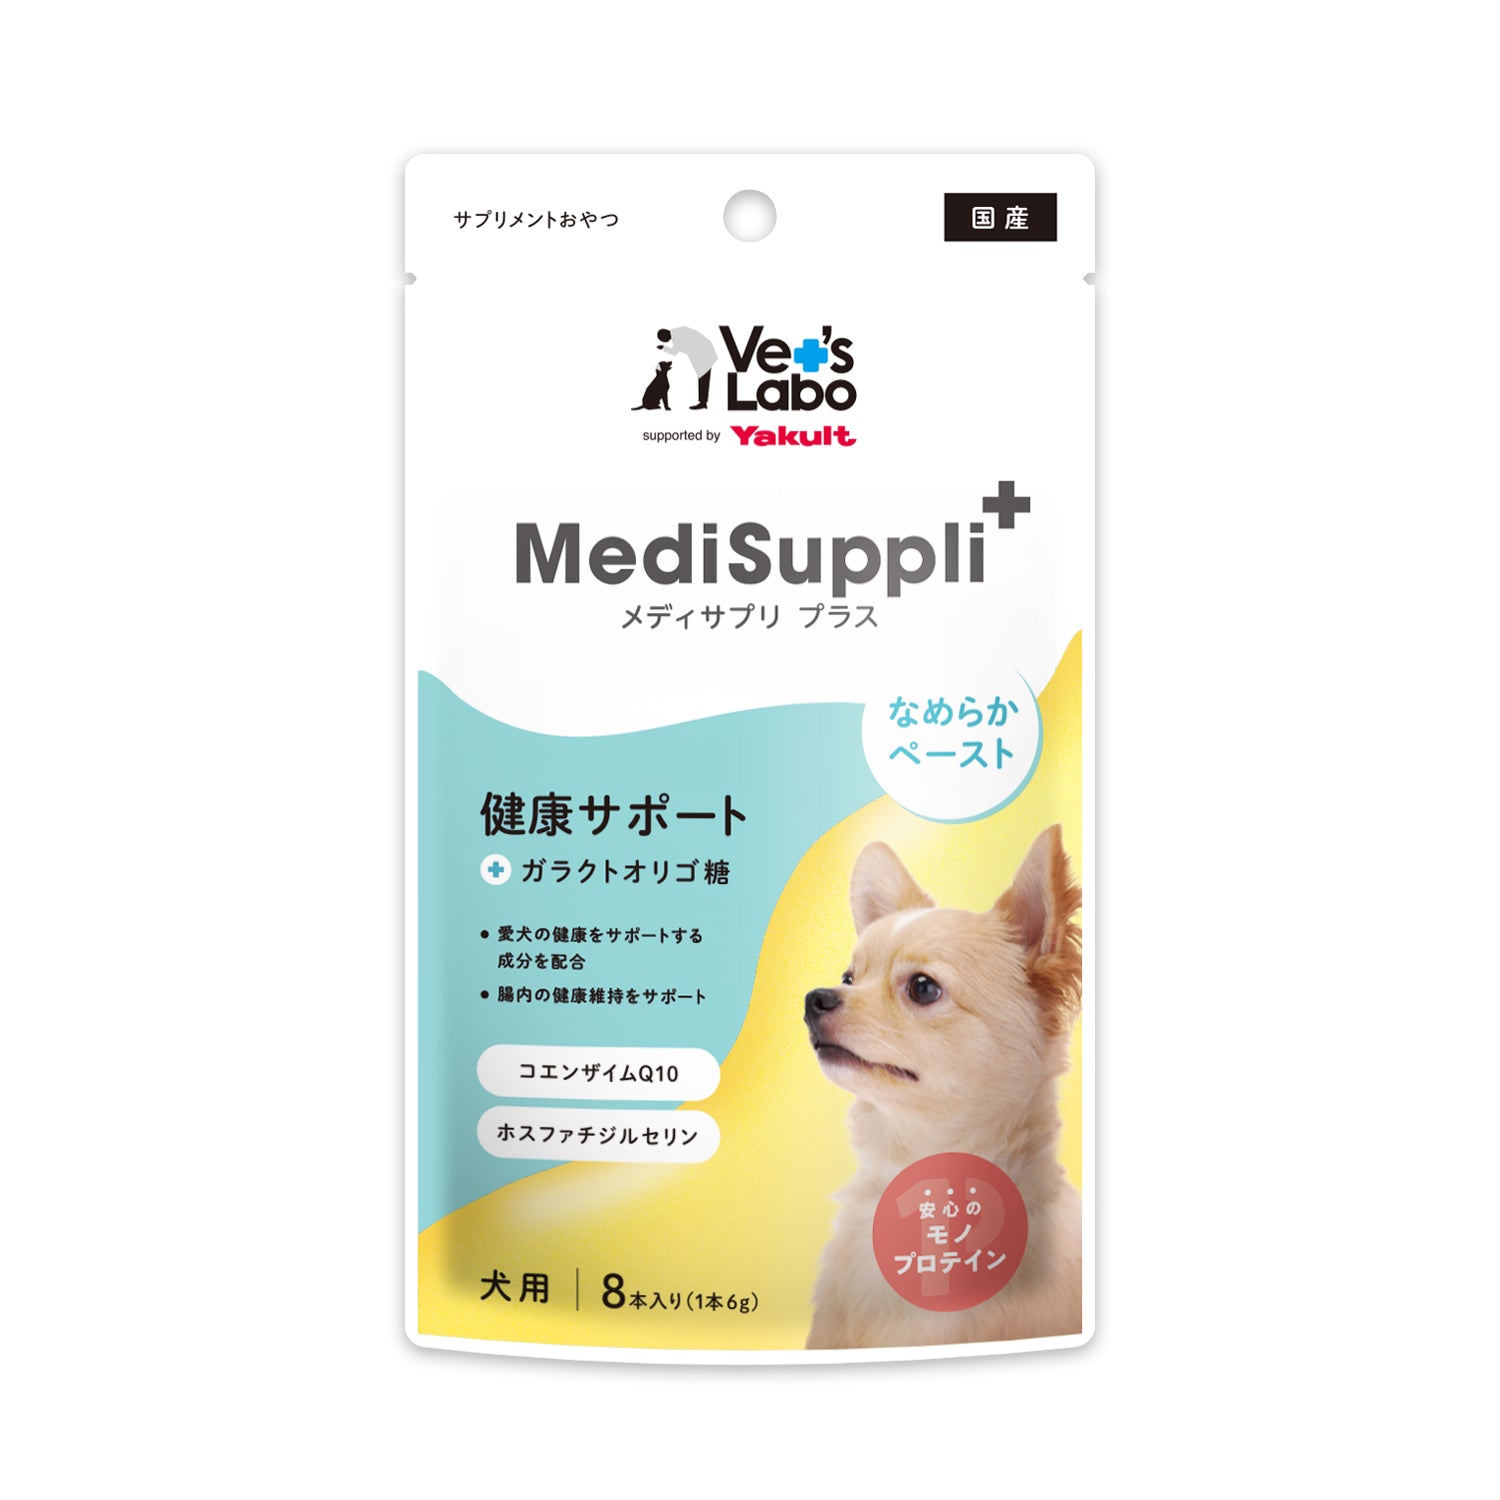 MediSuppli＋ 健康サポート